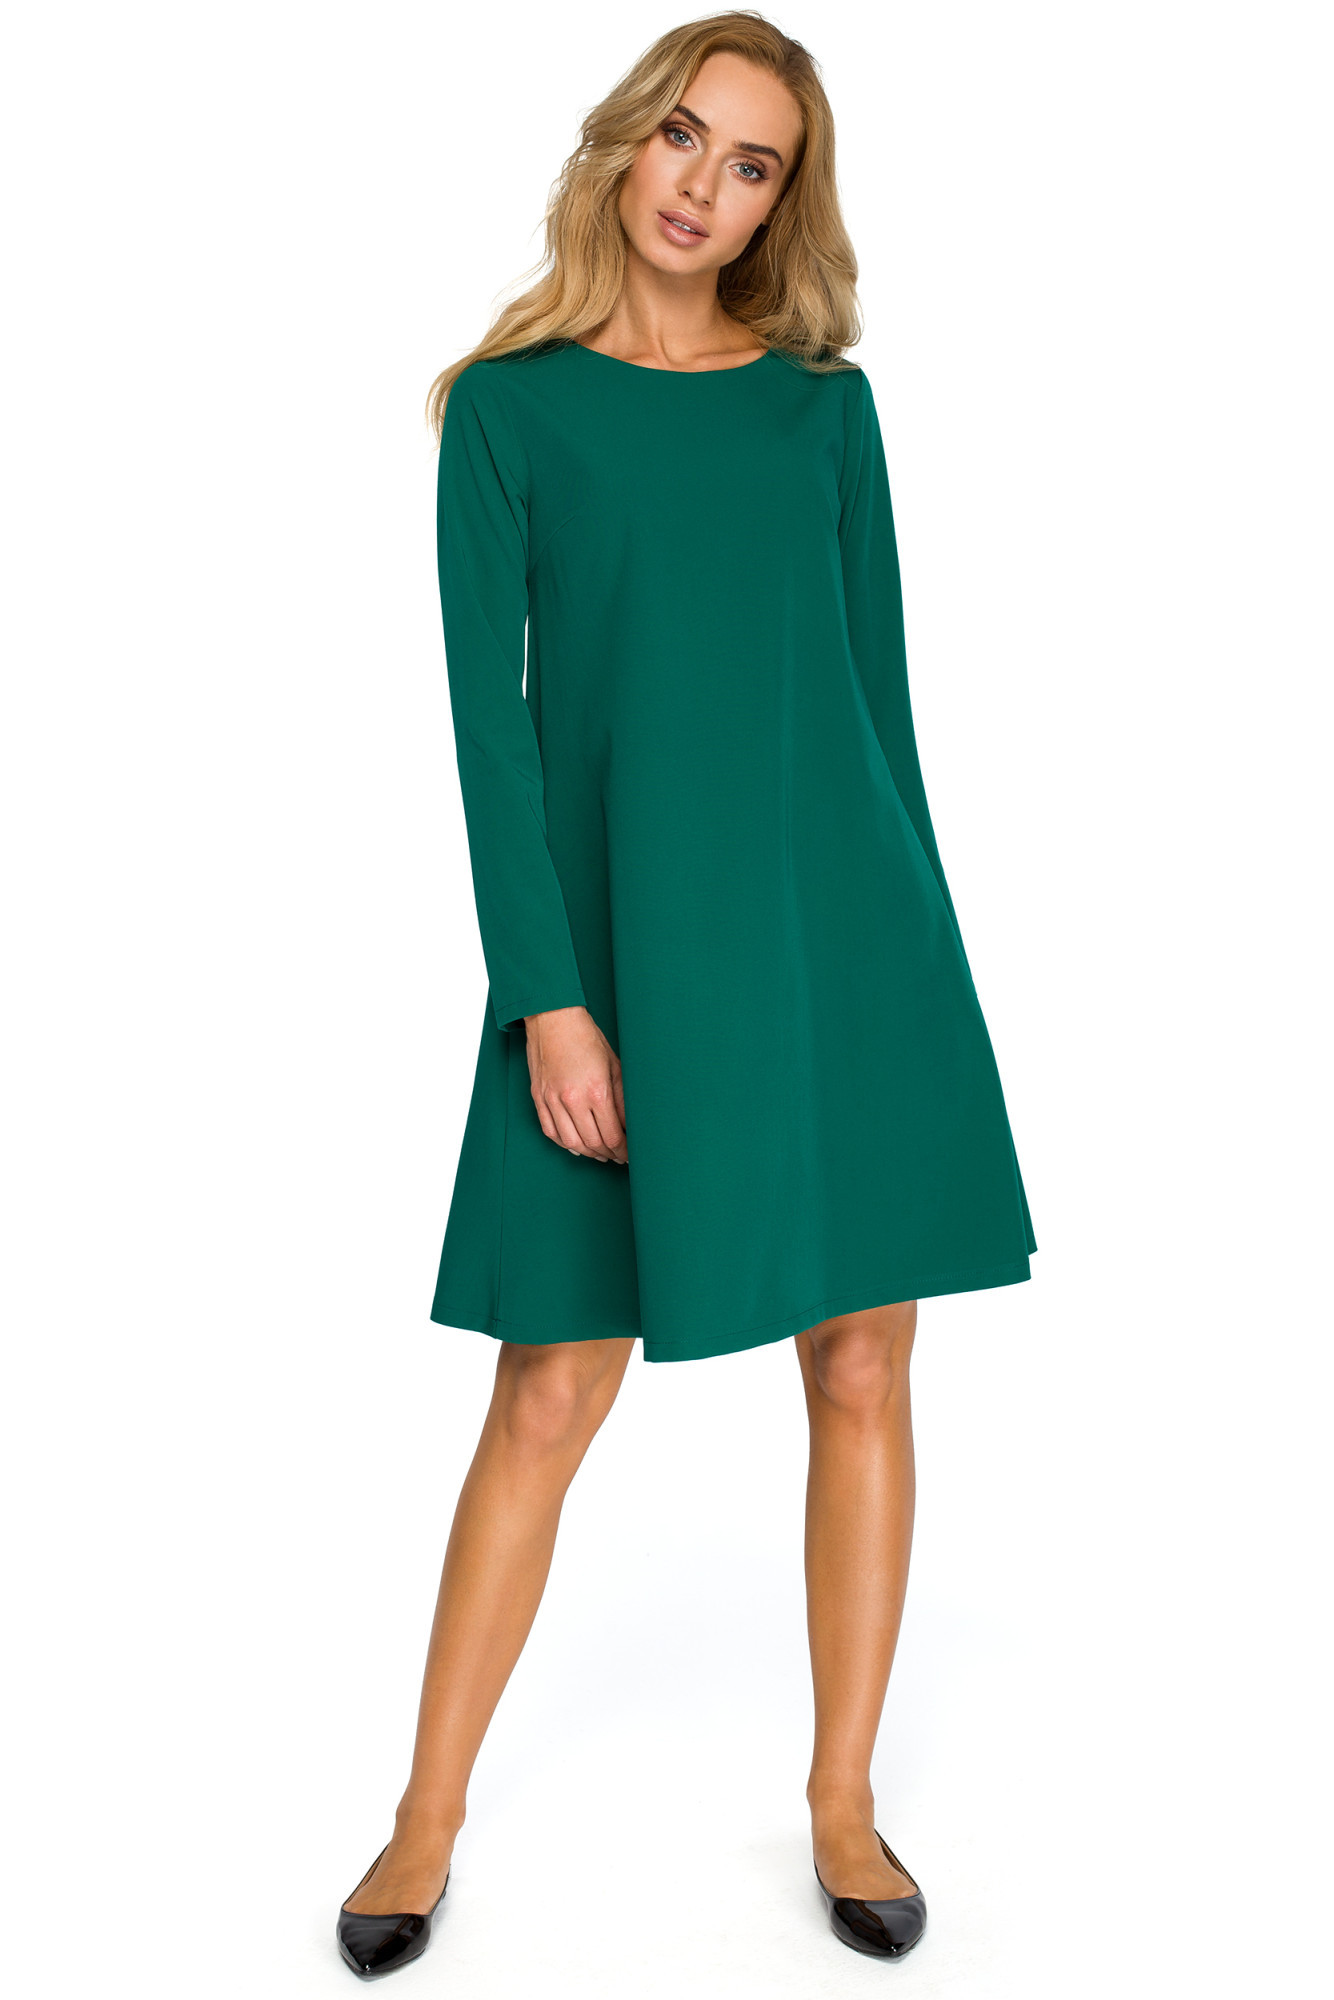 Stylove Šaty S137 Green S